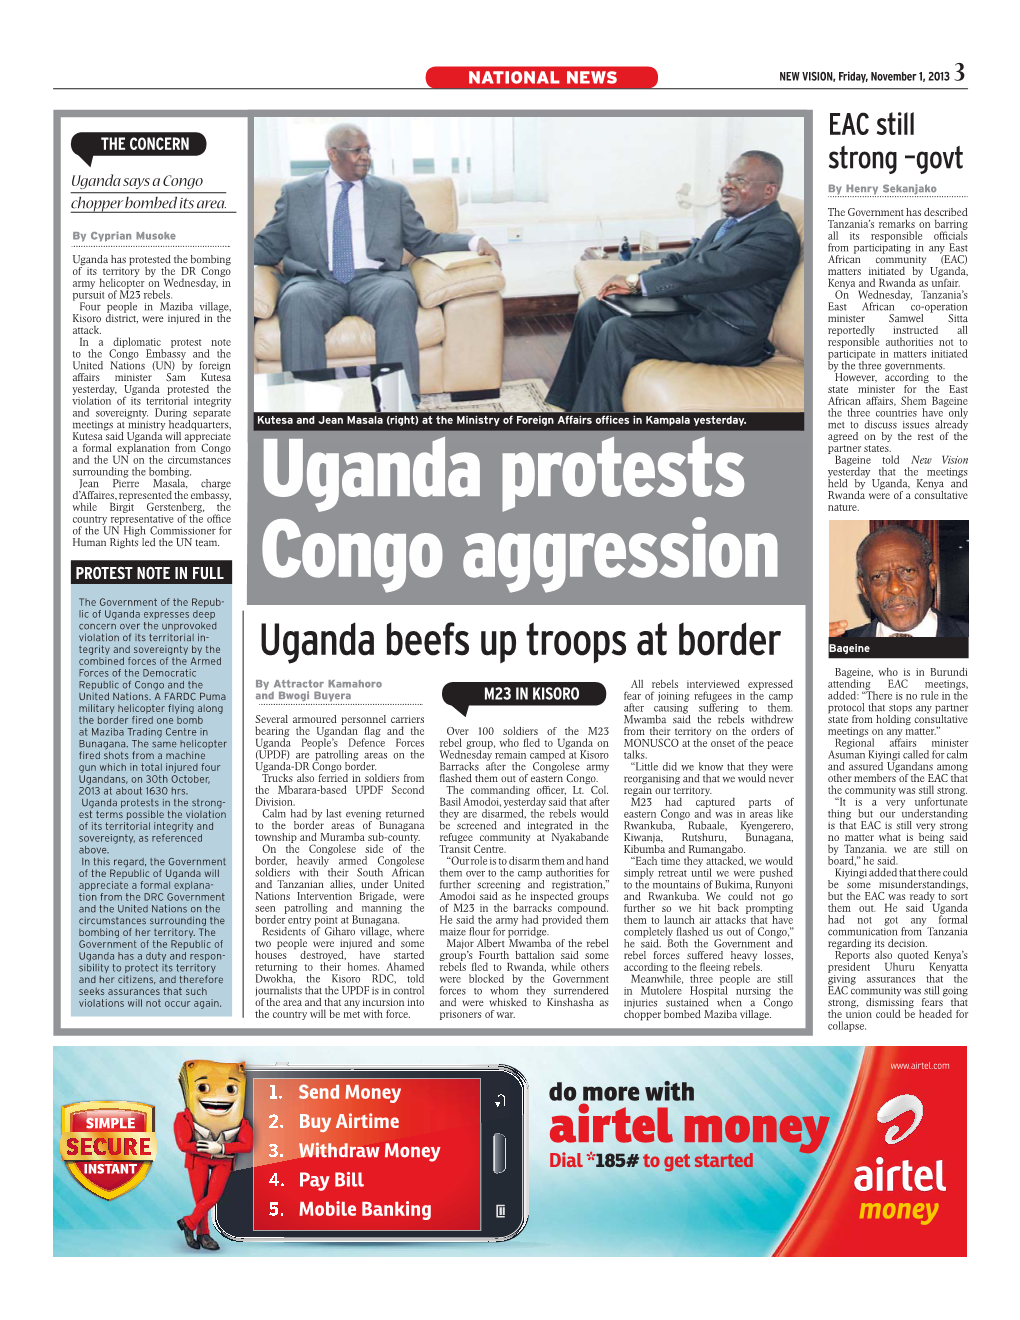 Uganda Protests Congo Aggression